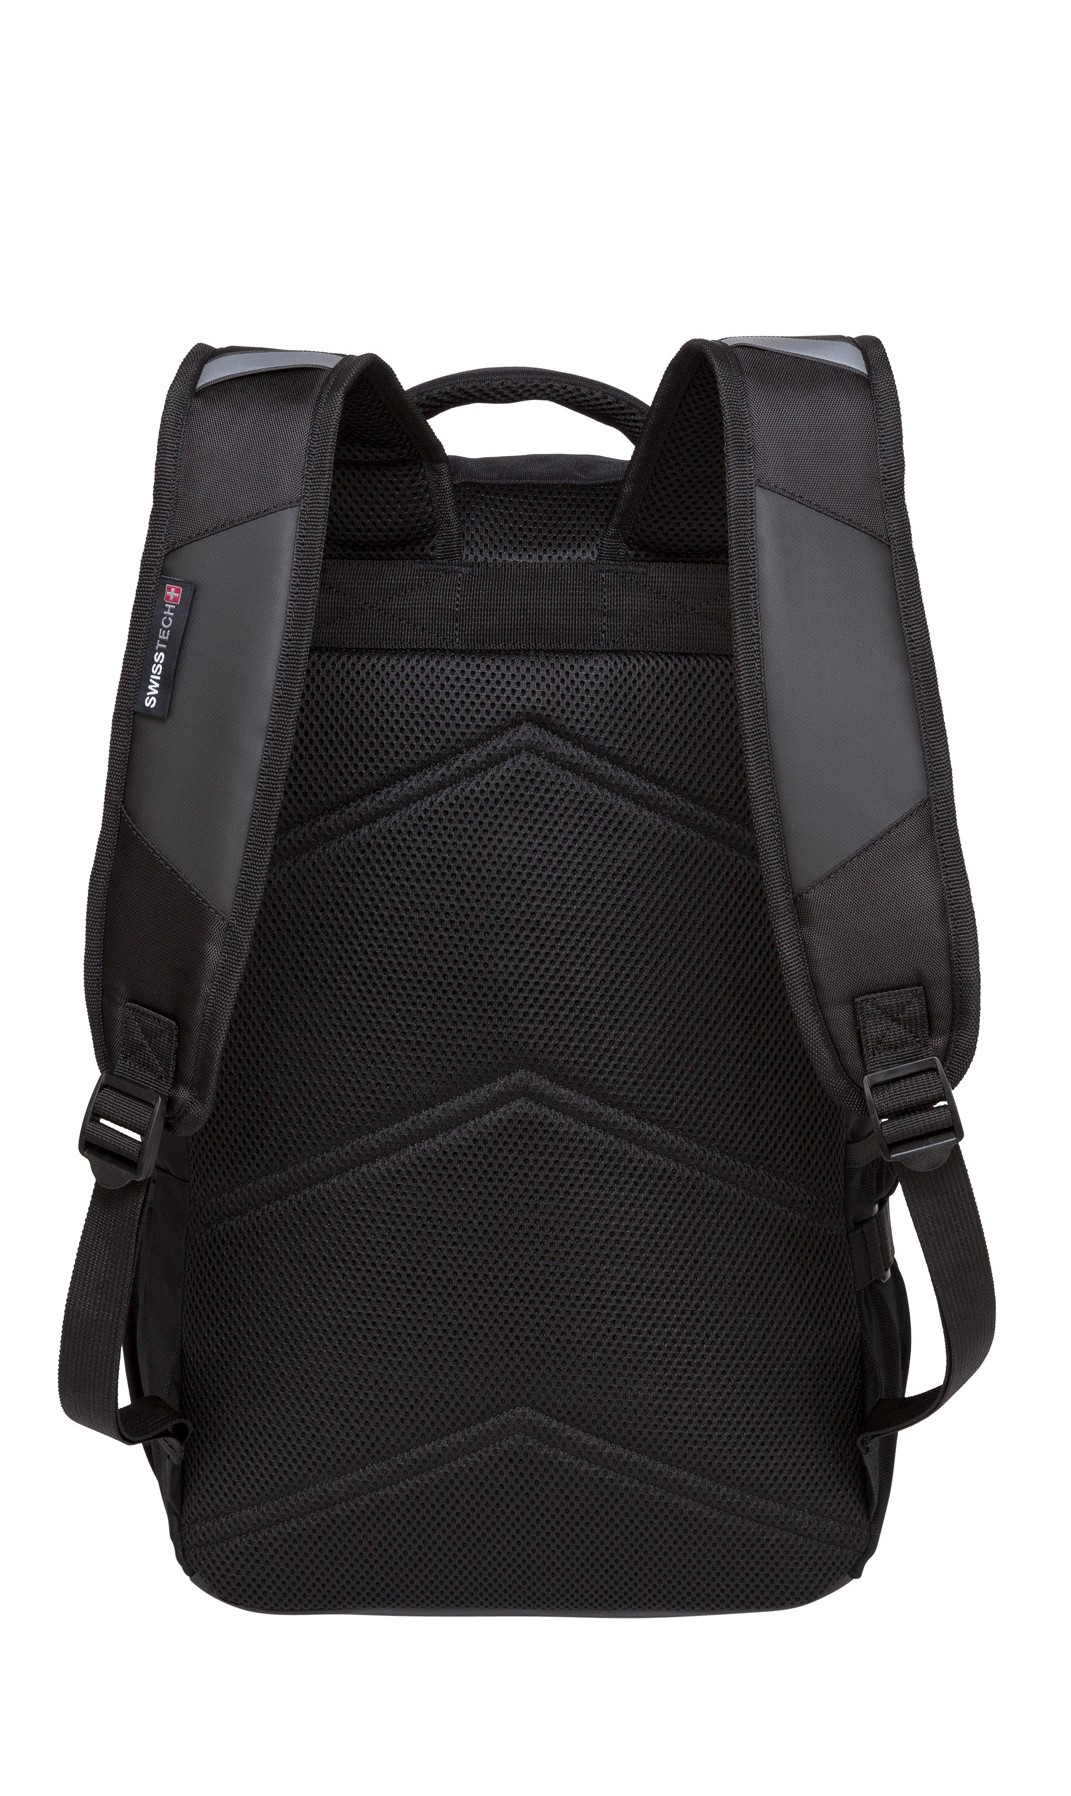 SwissTech Lucerne 34.4 L School Backpack Laptop Tablet Sleeve, Black, Unisex, Adult, Teen, Polyester - image 5 of 9